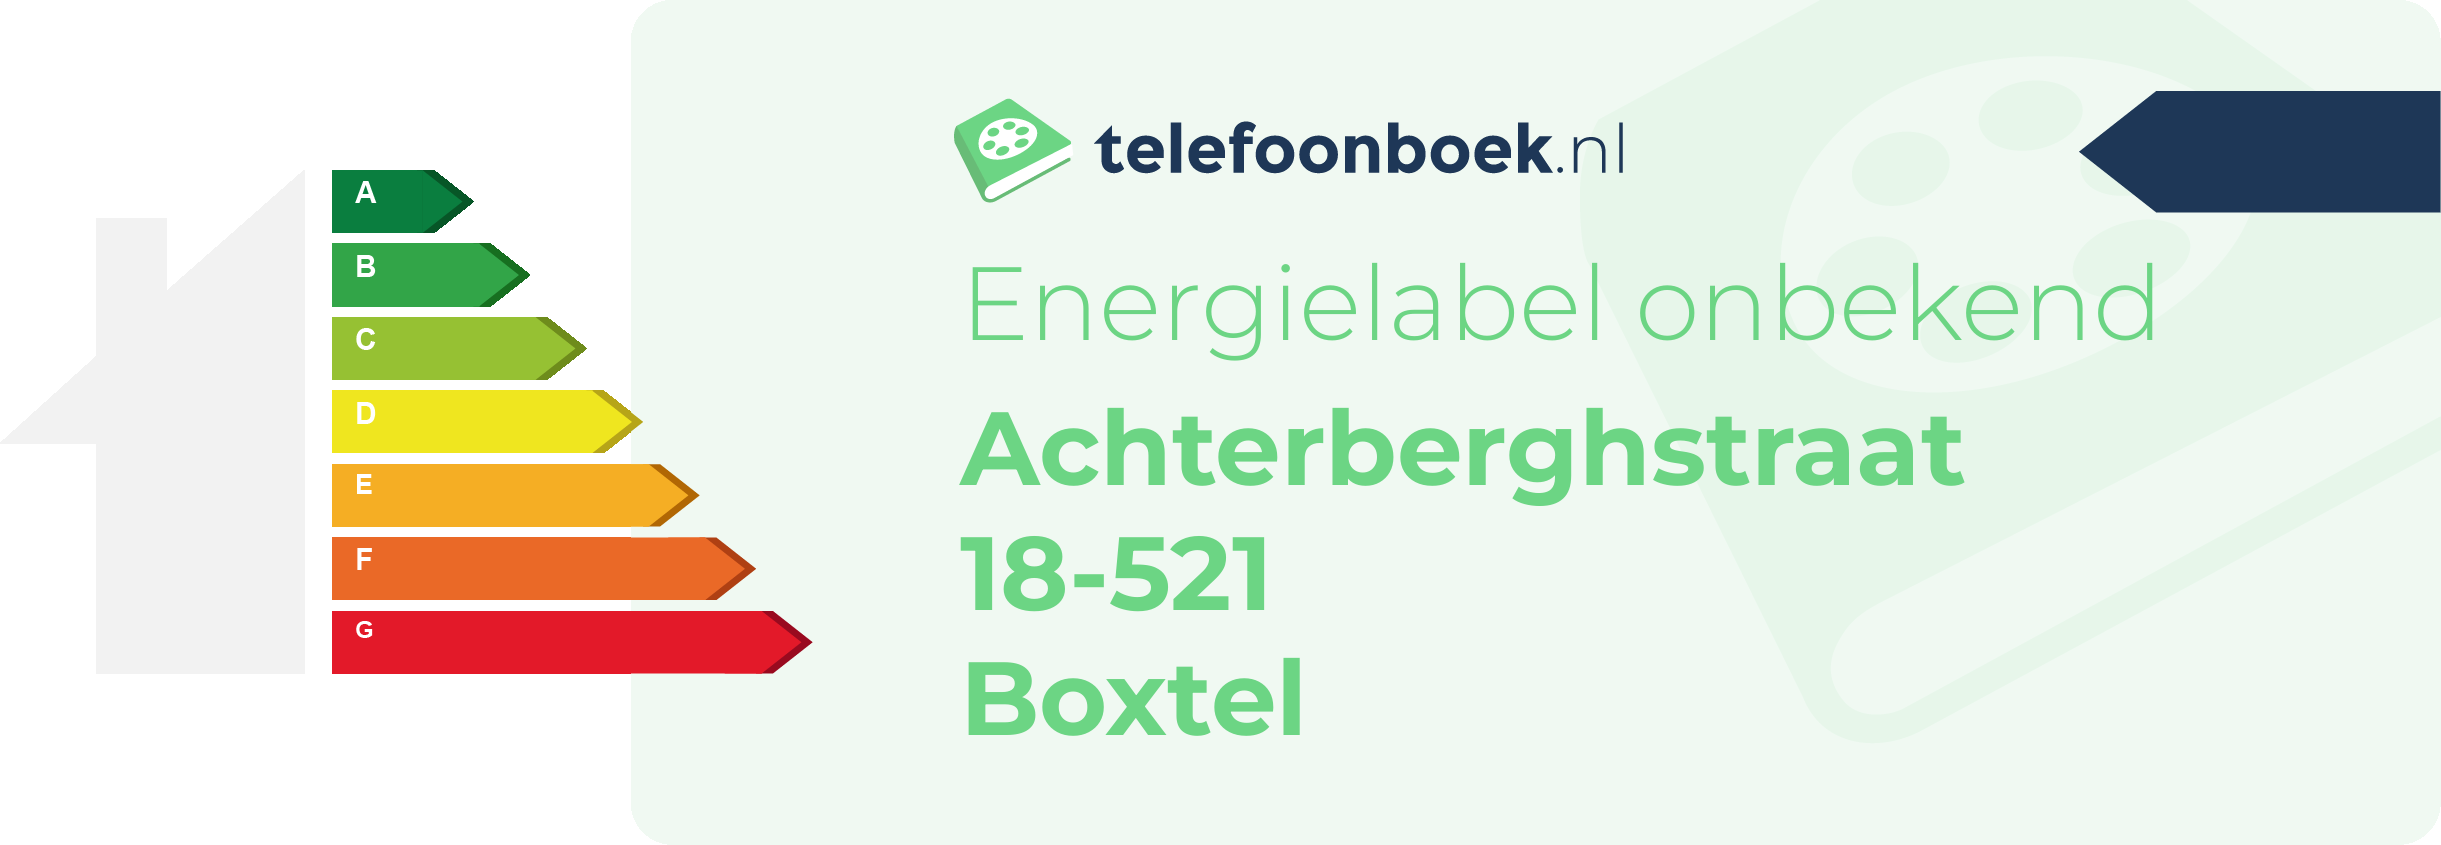 Energielabel Achterberghstraat 18-521 Boxtel